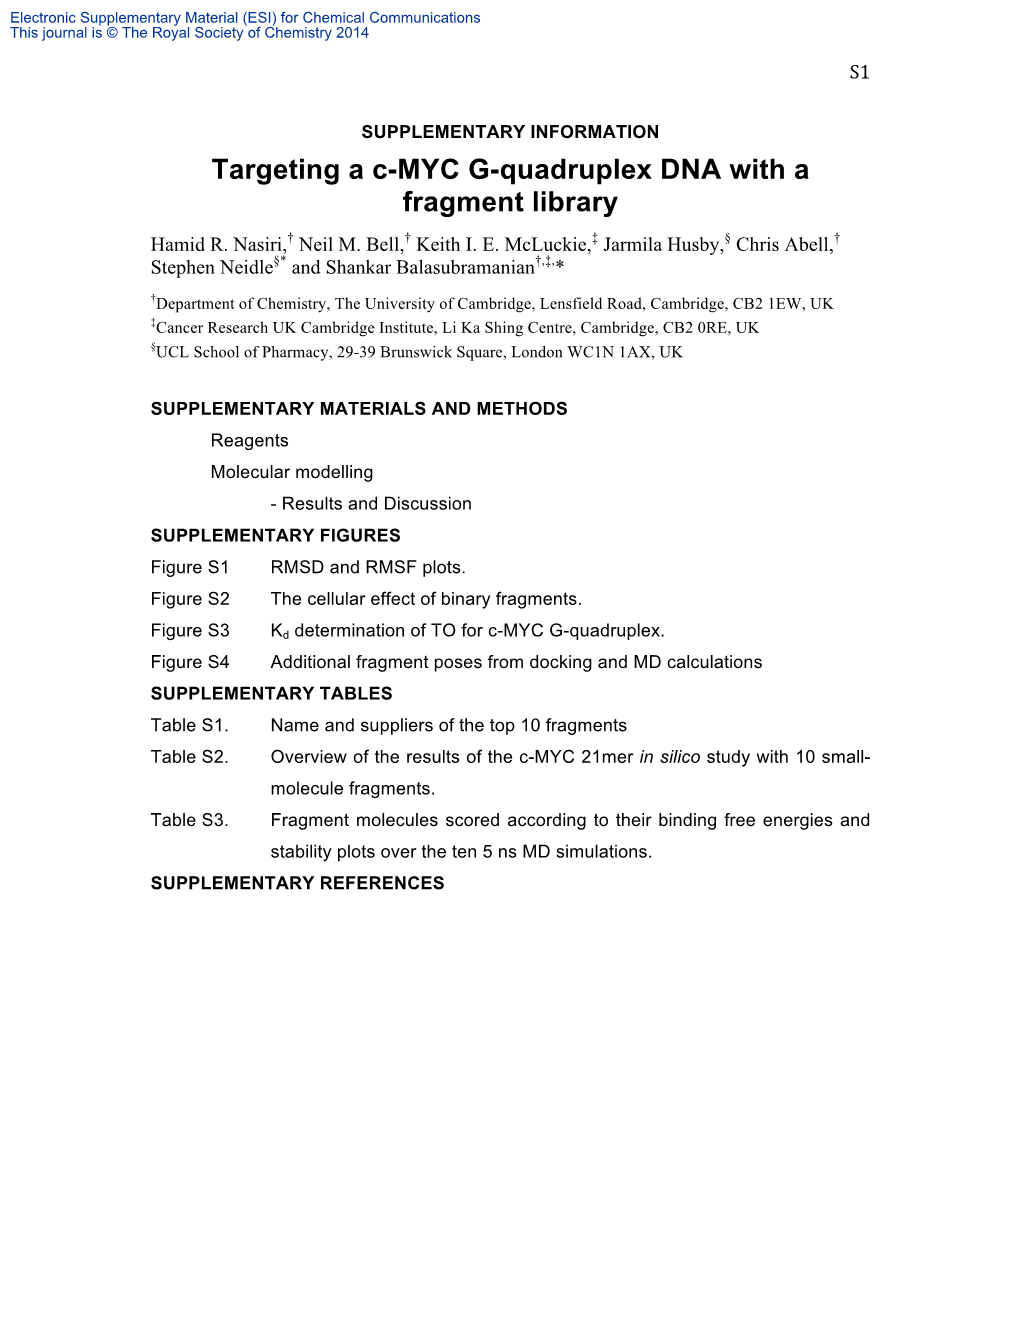 Targeting a C-MYC G-Quadruplex DNA with a Fragment Library Hamid R